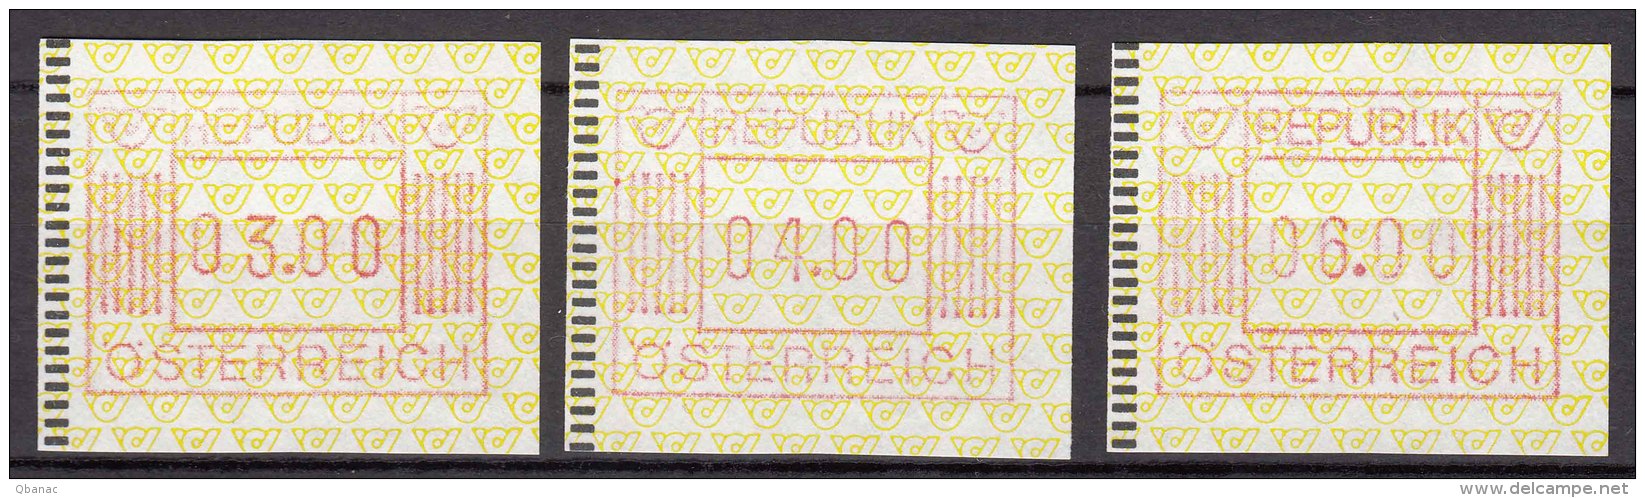 Austria Machine Stamps, Automatmarken 1983 - Macchine Per Obliterare (EMA)